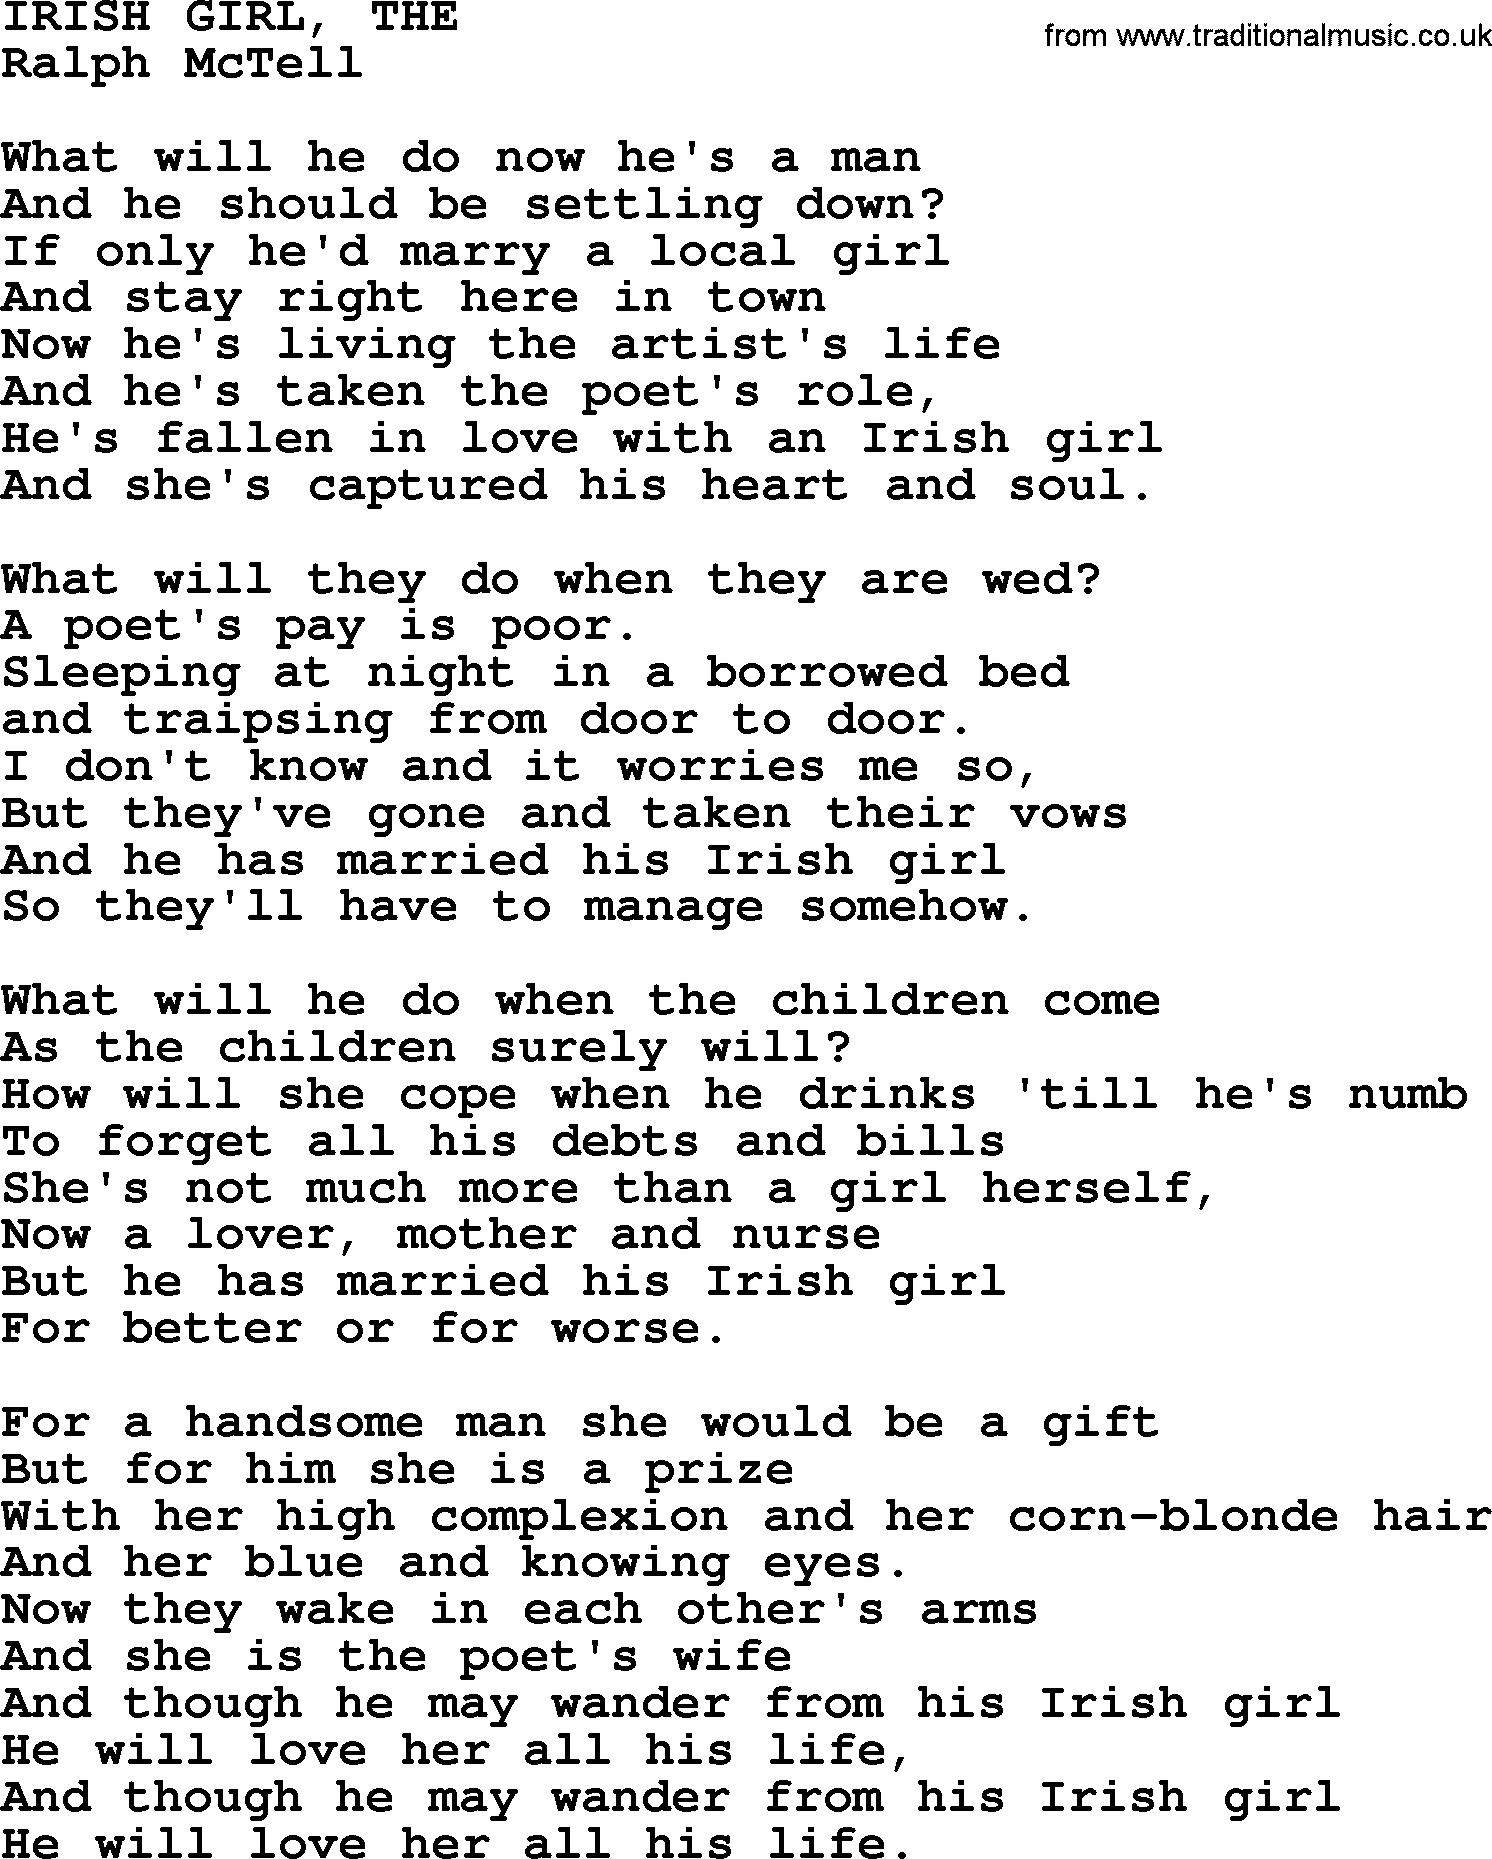 Ralph McTell Song: Irish Girl, The, lyrics